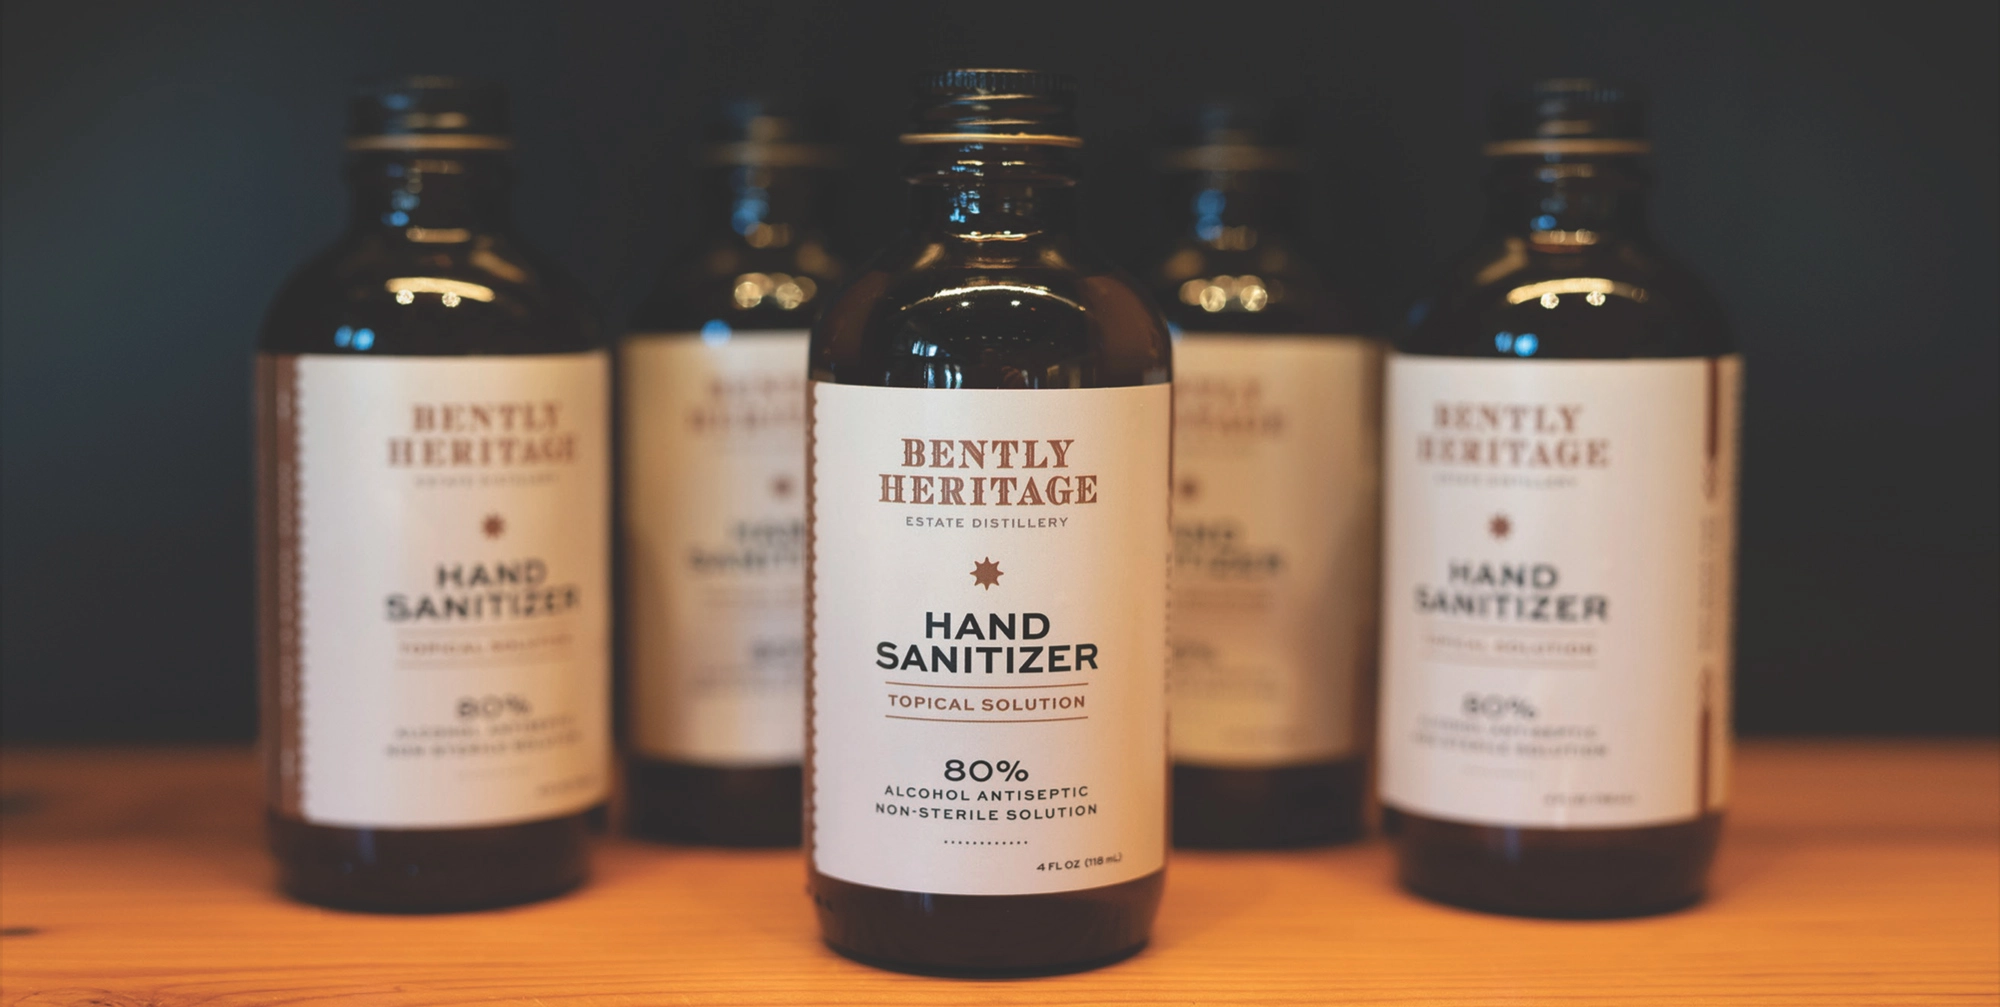 Heritage hand sanitizer